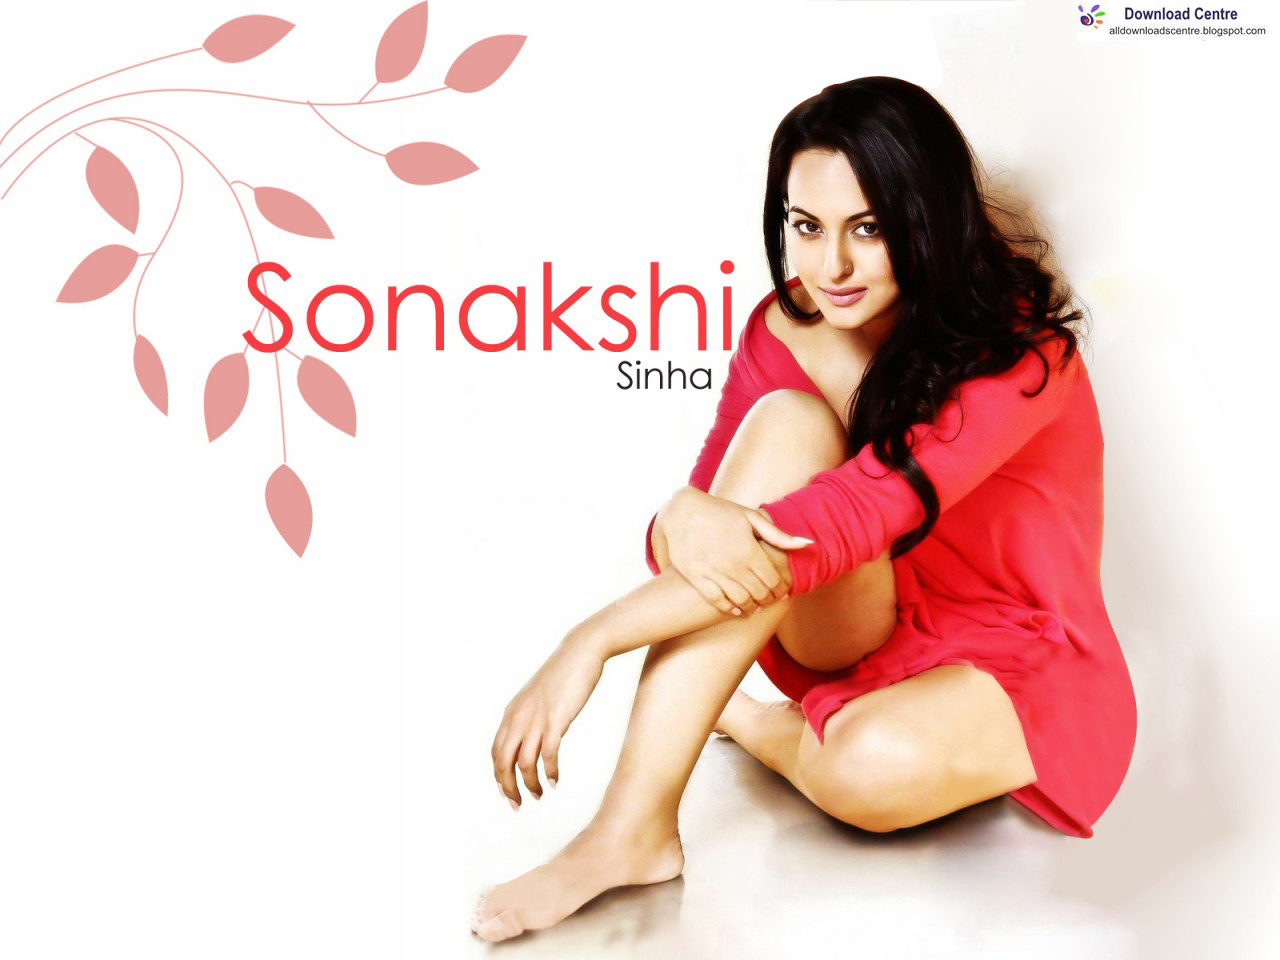 http://2.bp.blogspot.com/-izaYgHkKabo/TvsEo6hYoGI/AAAAAAAACck/T-WBG2gHH7Y/s1600/Sonakshi+Sinha+in+Red+Dress+Wallpaper.jpg